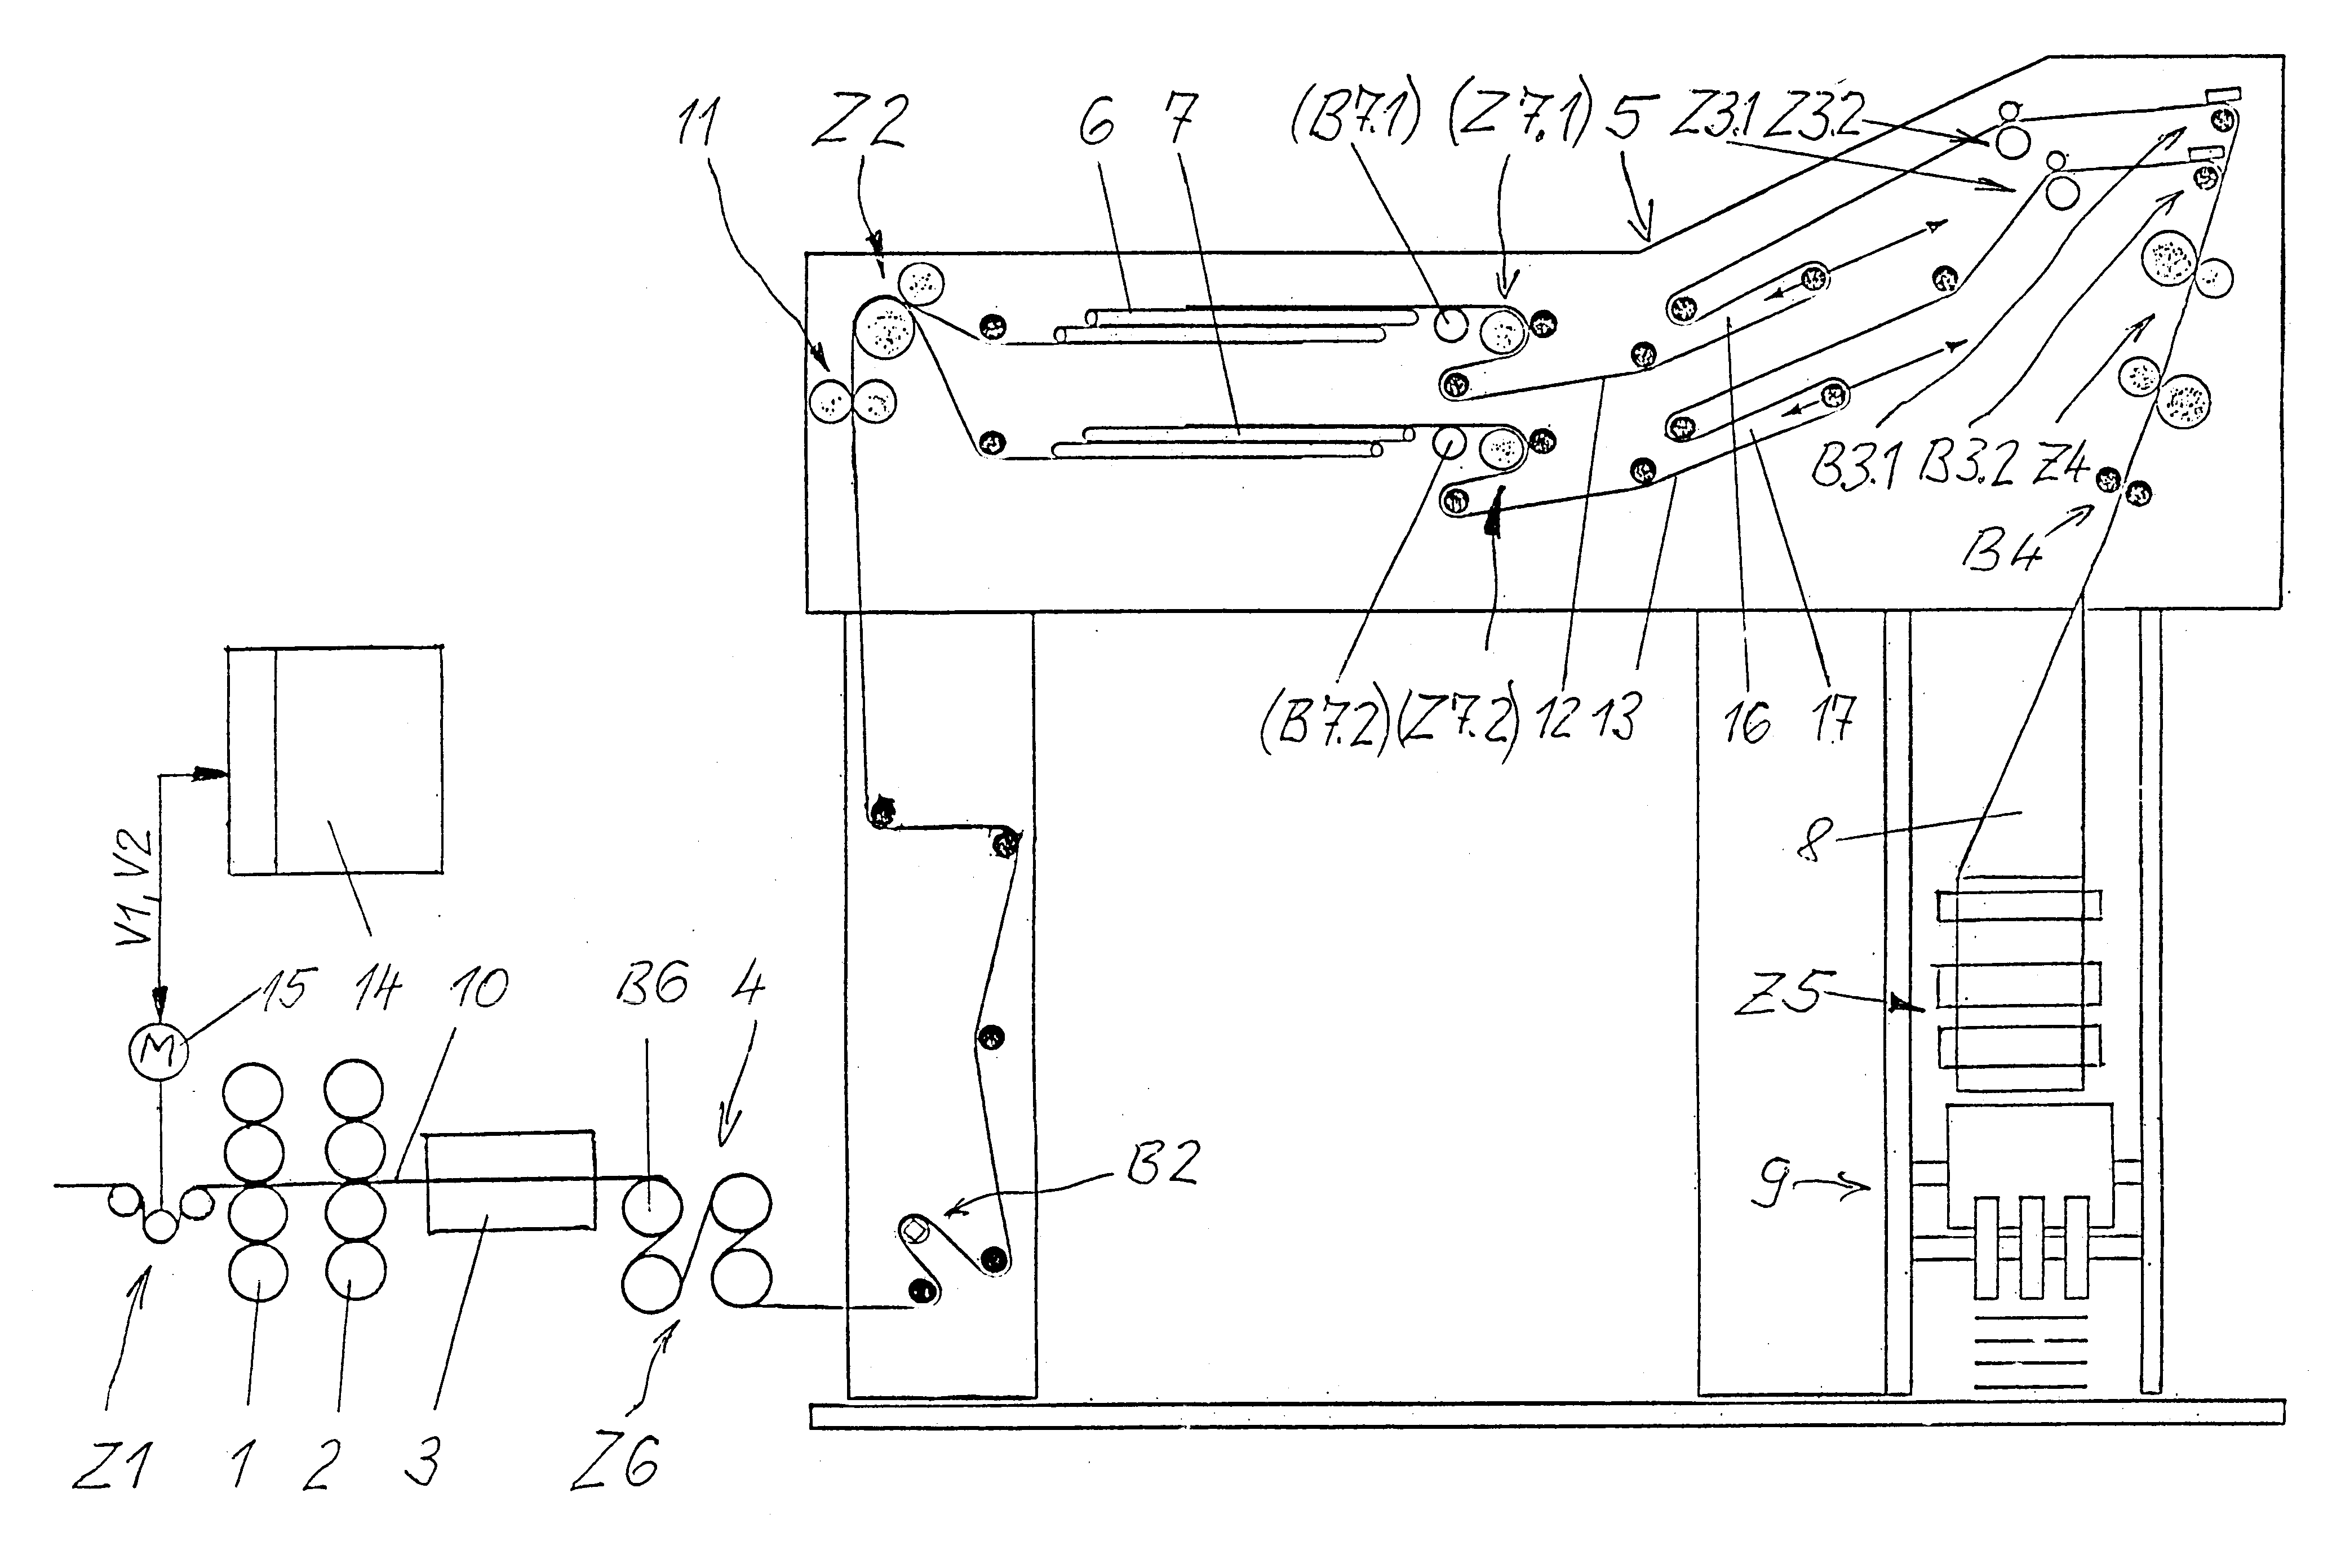 Method of operating a web-fed rotary printing machine